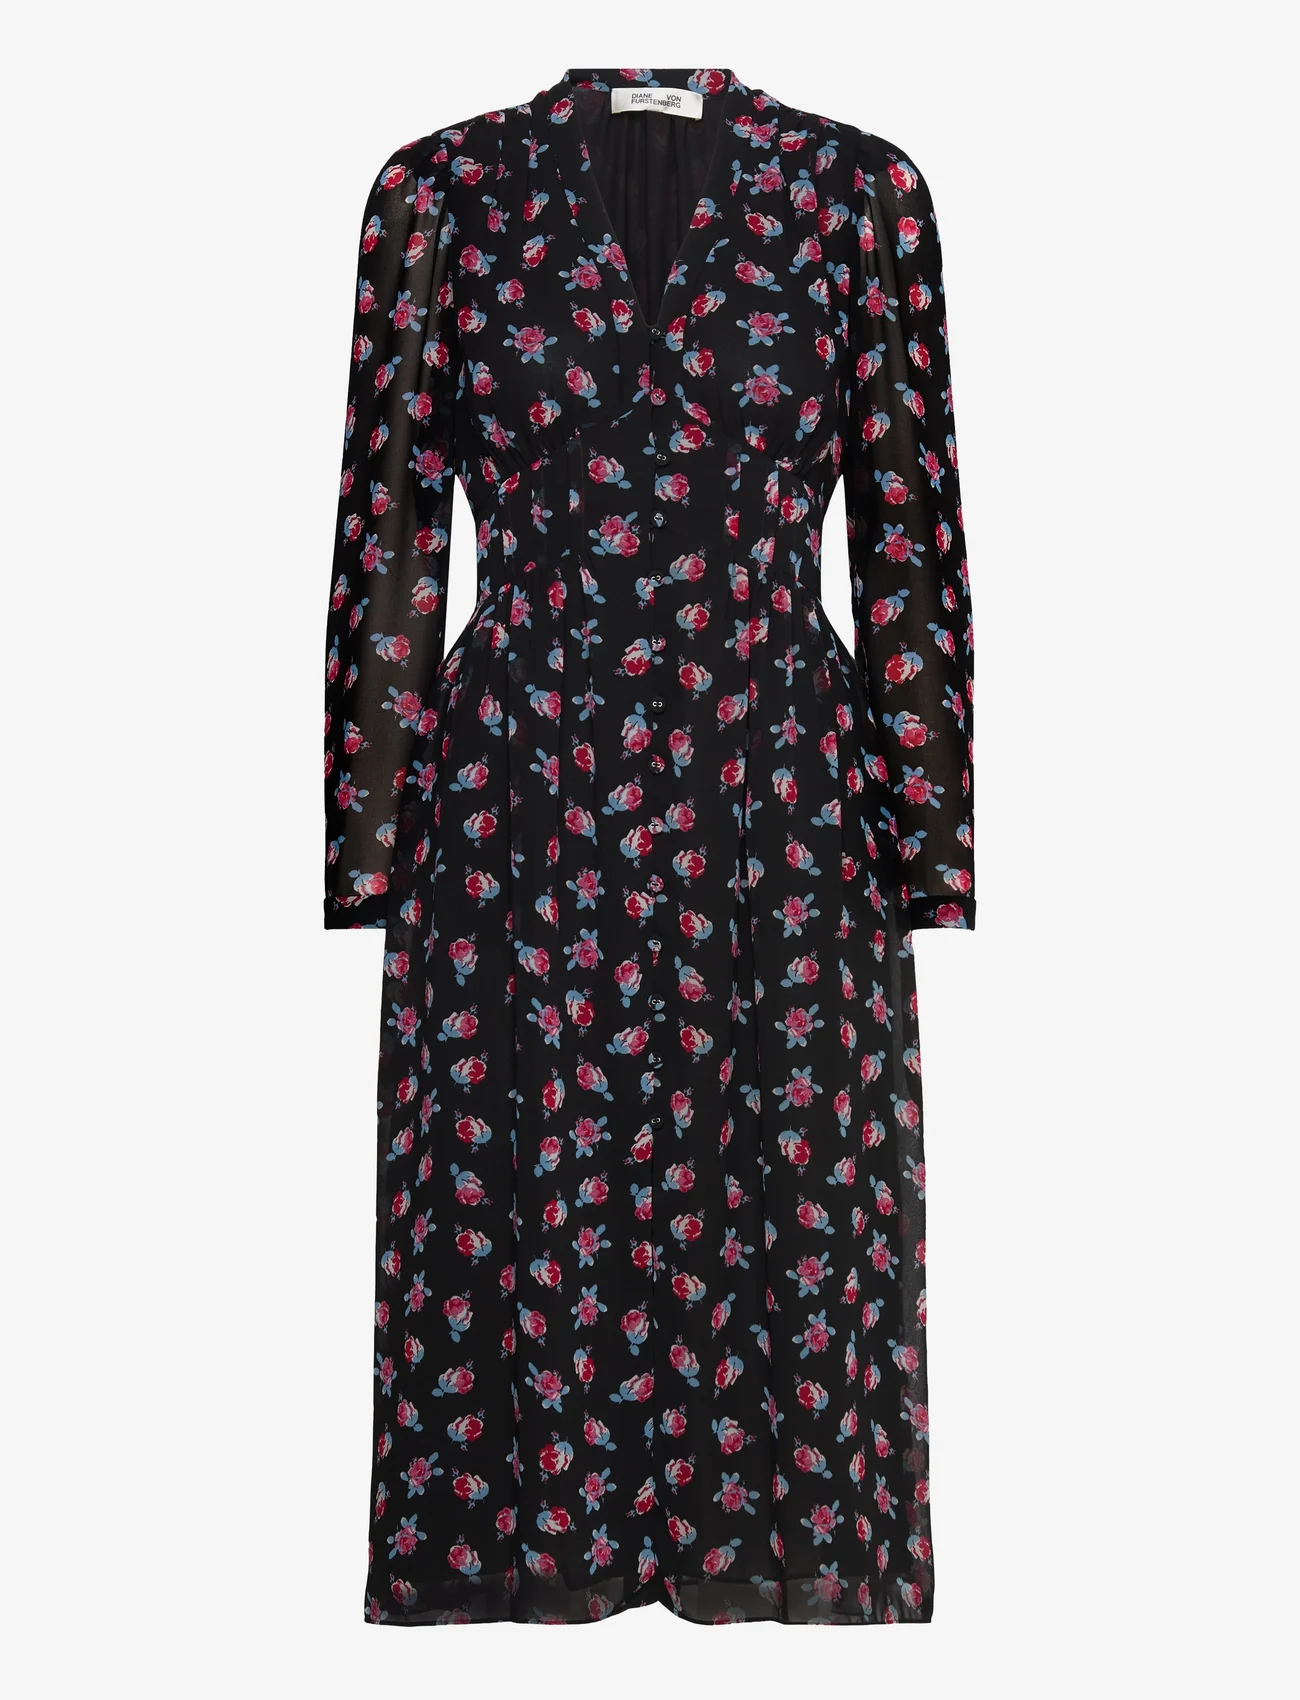 Diane von Furstenberg - DVF TIED ERICA L/S MIDI DRESS - sukienki do kolan i midi - fortune rose dot - 0